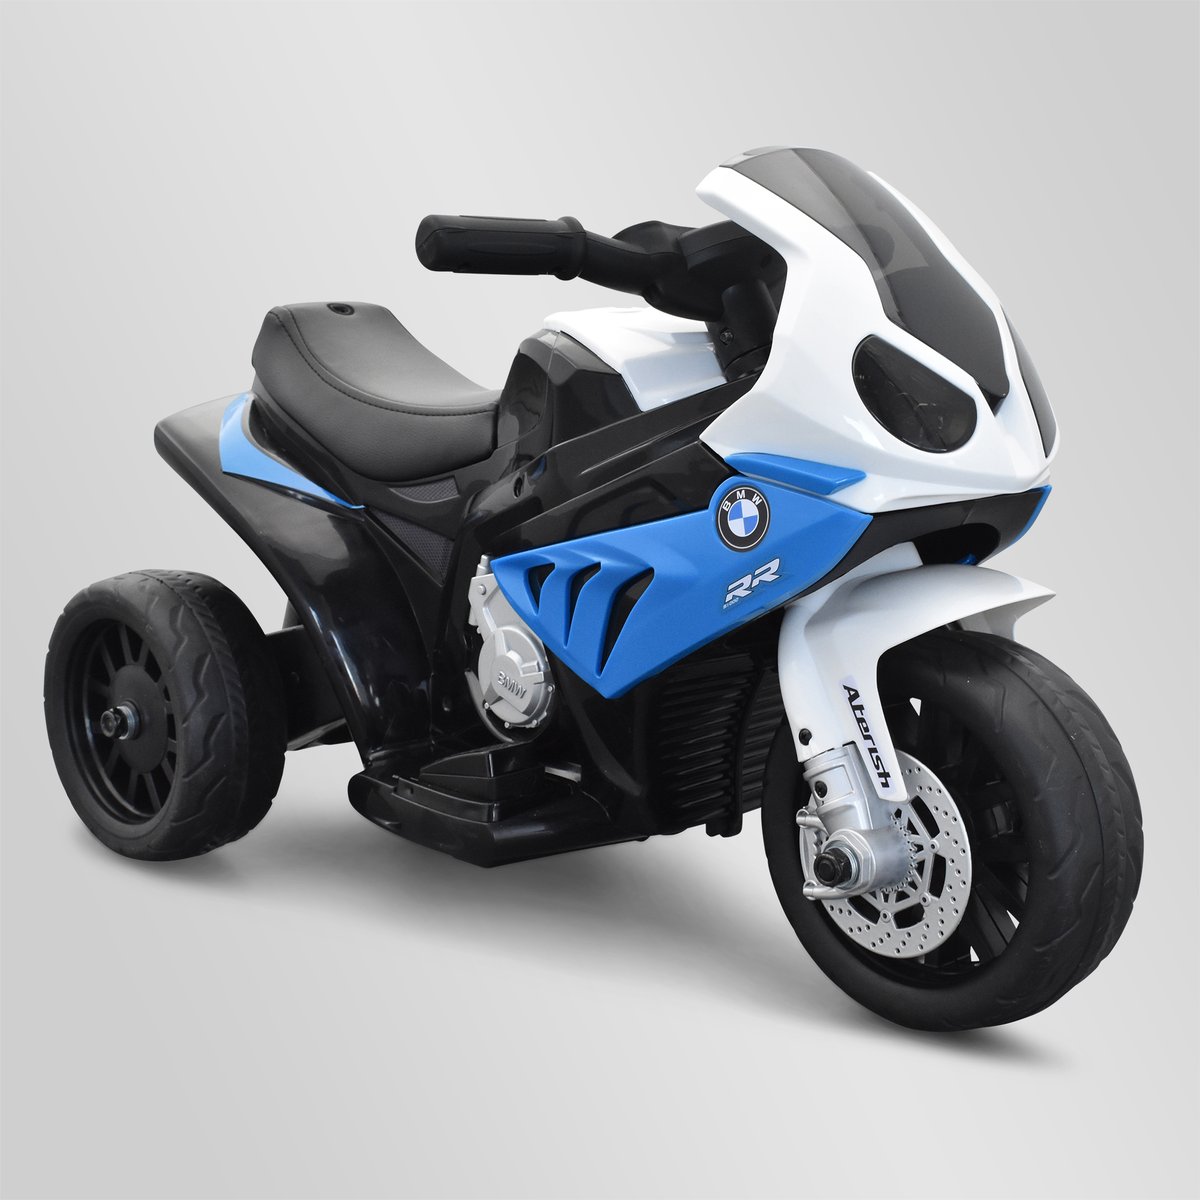 Moto électrique pour enfant - bmw s1000r 18w bleu - SmallMx | Smallmx -  Dirt bike, Pit bike, Quads, Minimoto